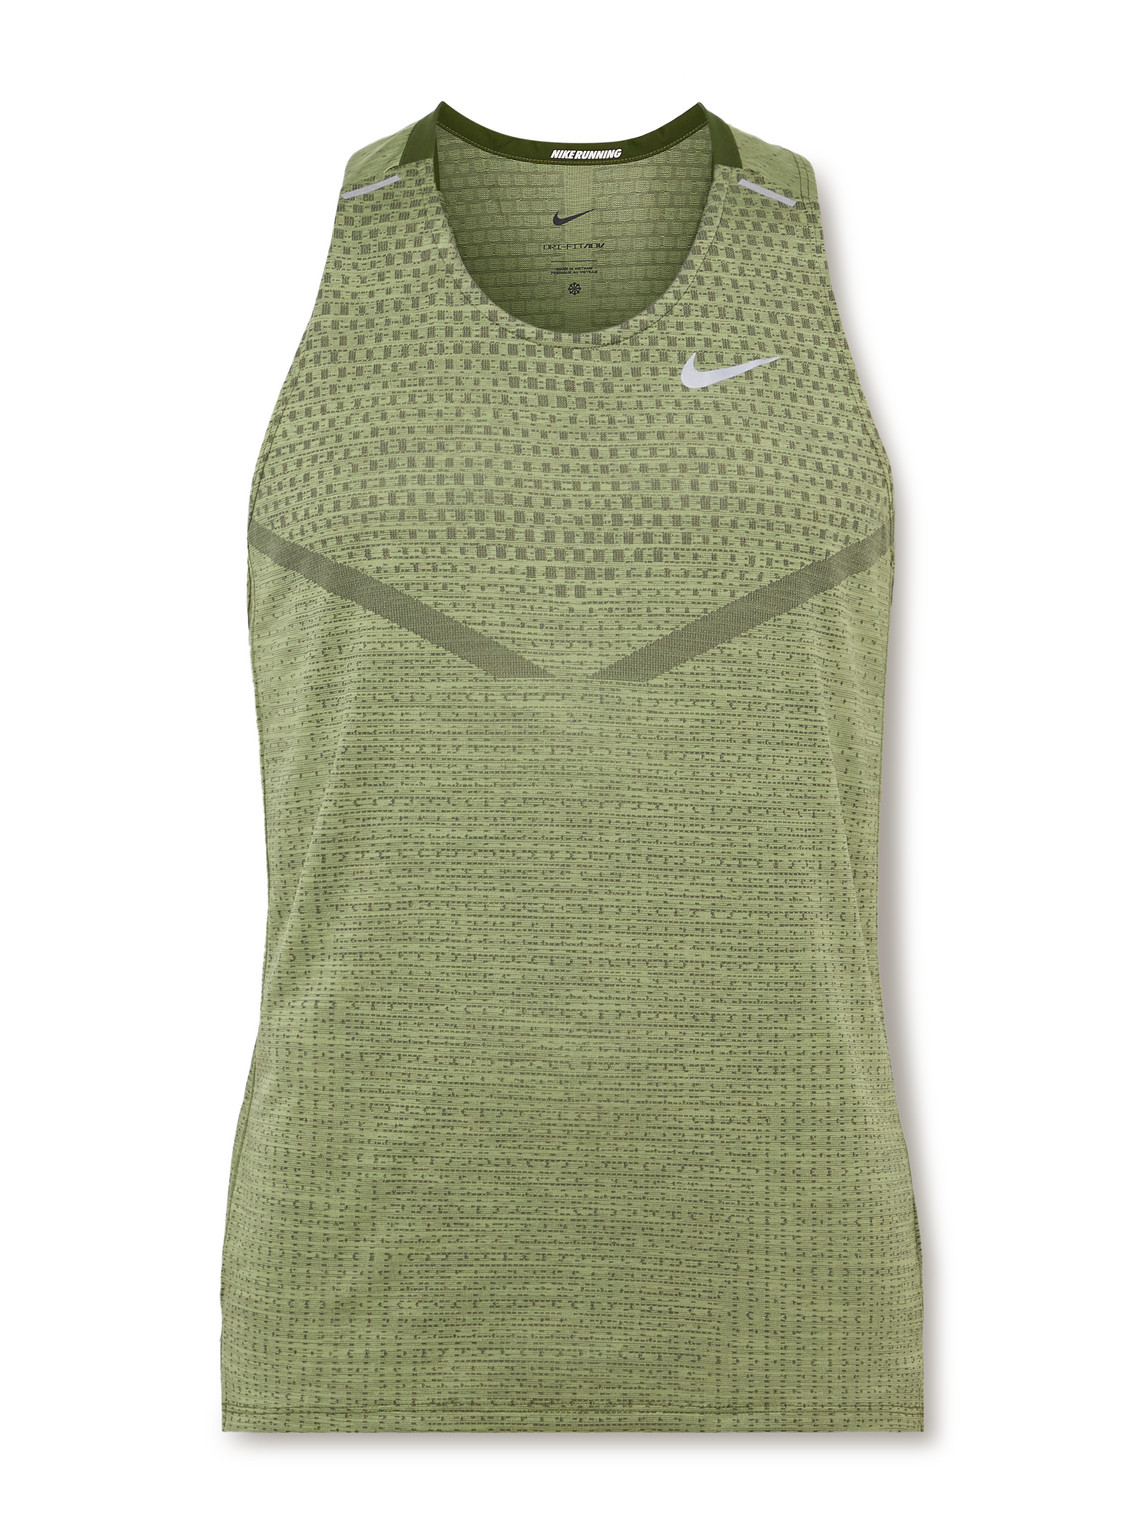 Nike Men's Dri-fit Adv Techknit Ultra Running Tank Top In Green